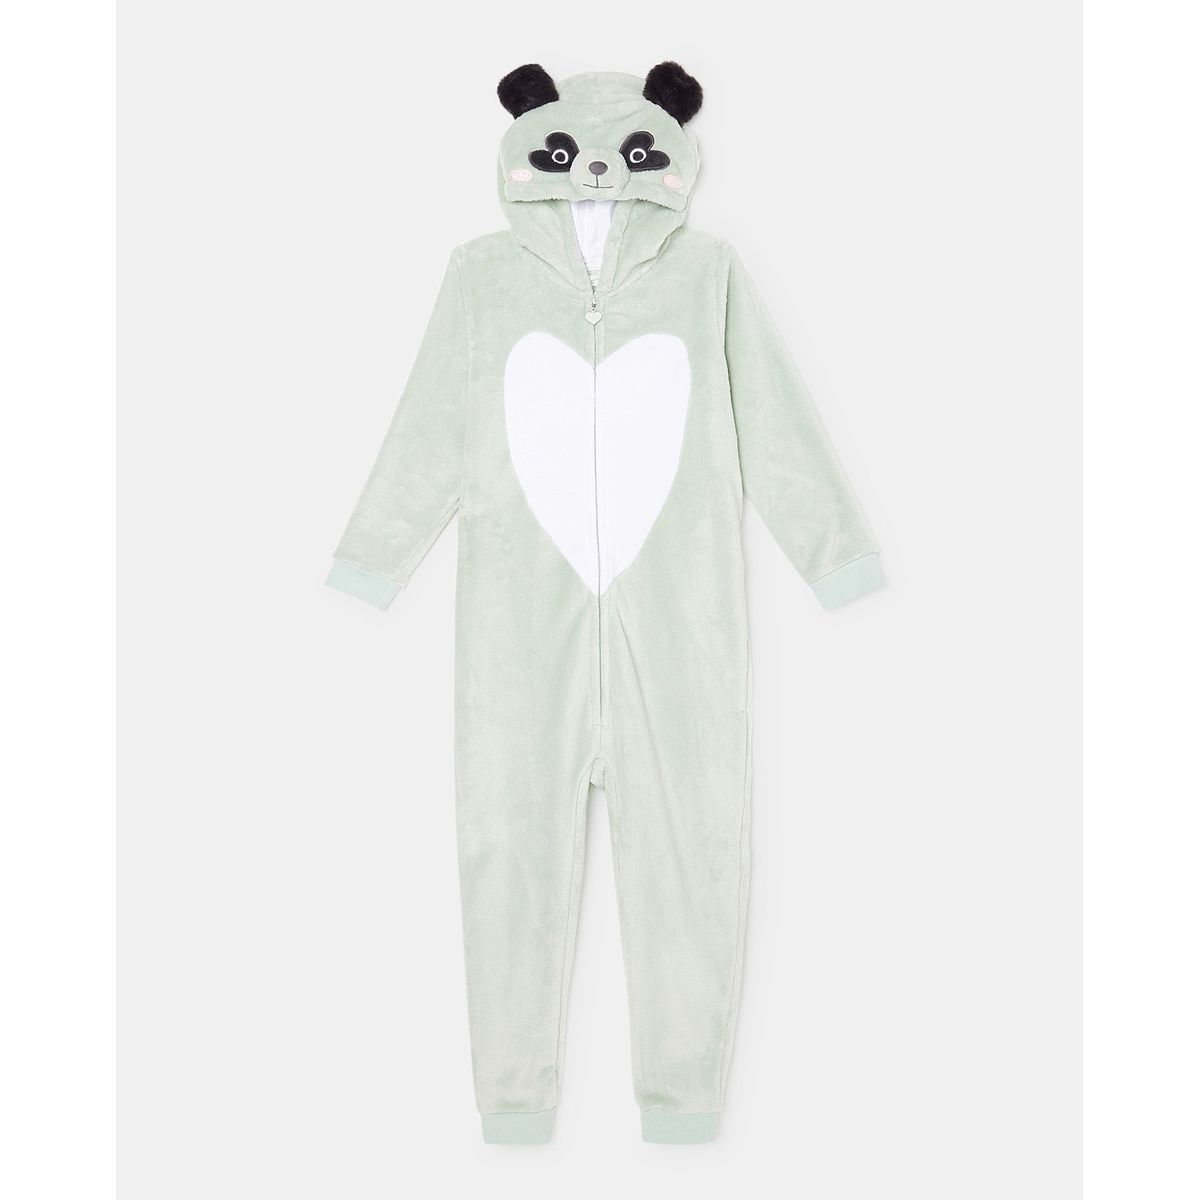 combinaison deguisement pyjama panda 14 ans